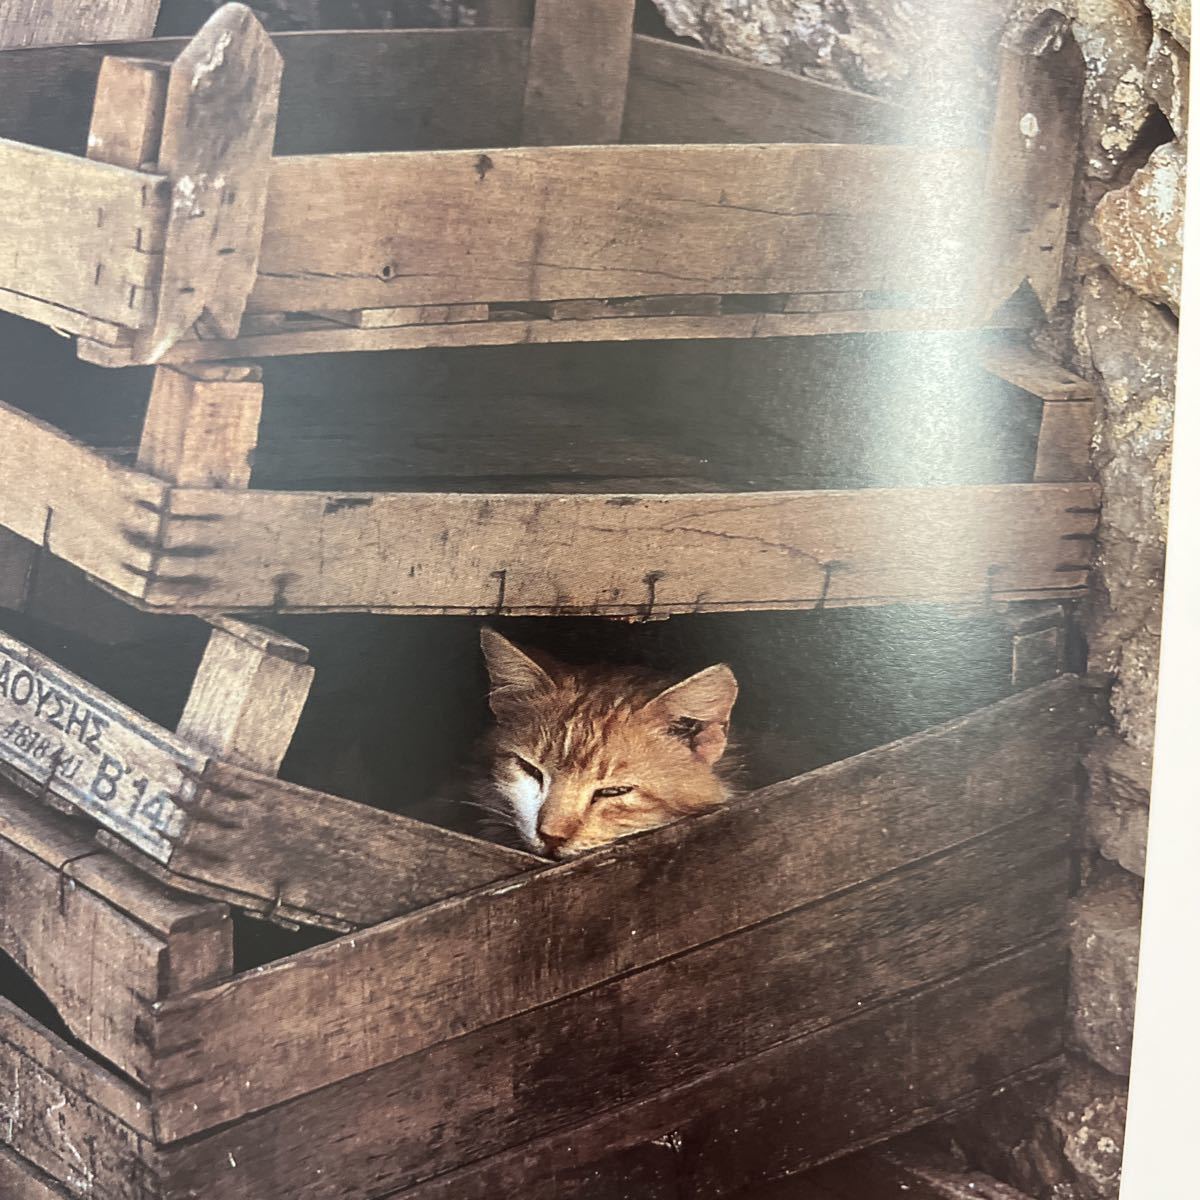 Sleeping in the Sun: Carefree Cats of the Greek Islands жесткий чехол 1997/10/6gilisia кошка фотоальбом иностранная книга старая книга 